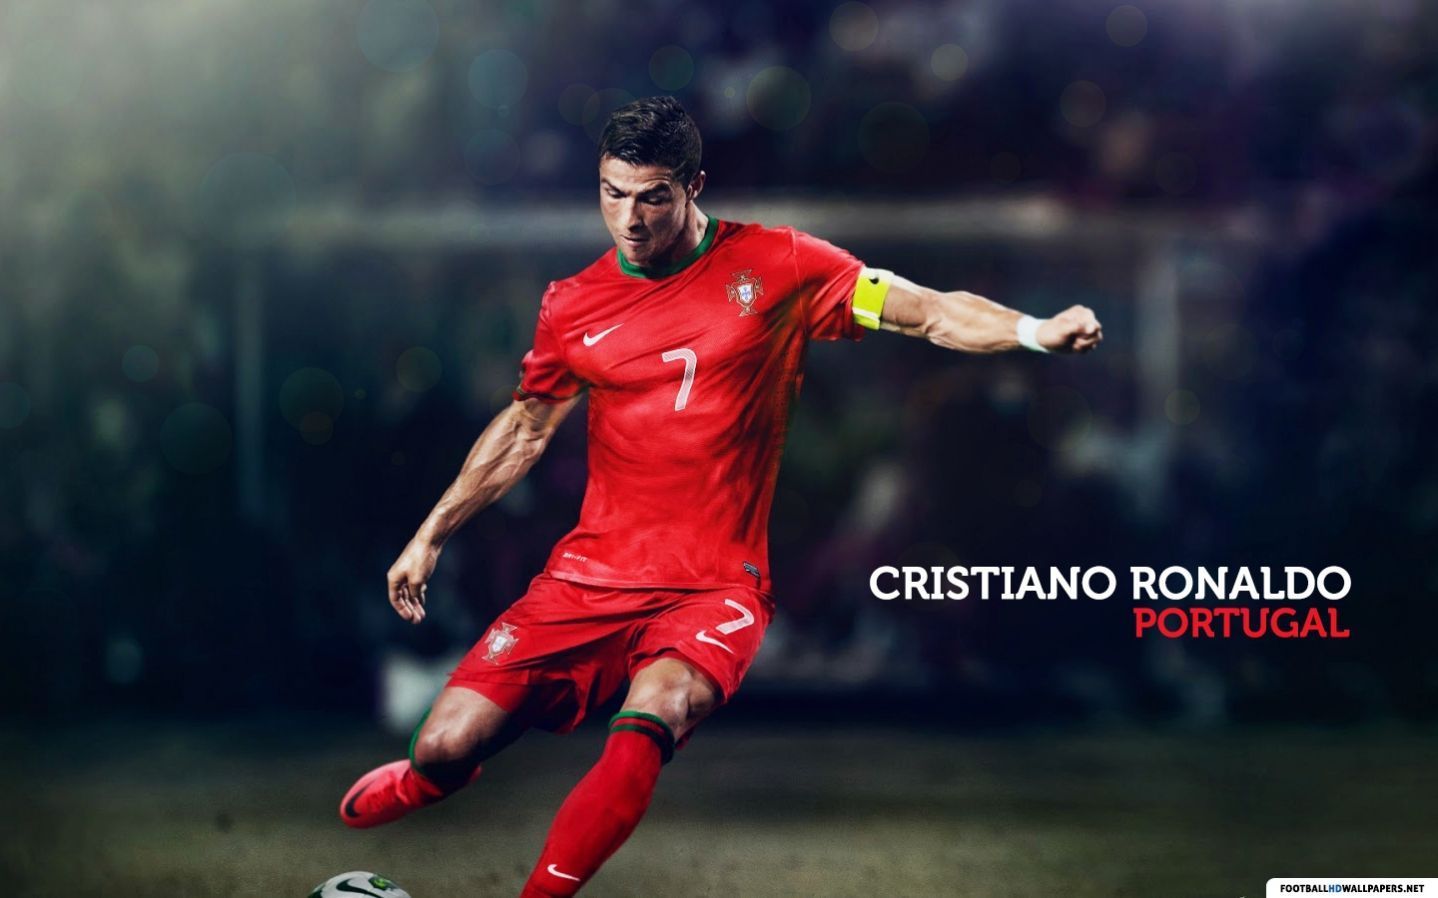 Cristiano Ronaldo Playing Football 1080p HD Wallpapers, Cristiano ...